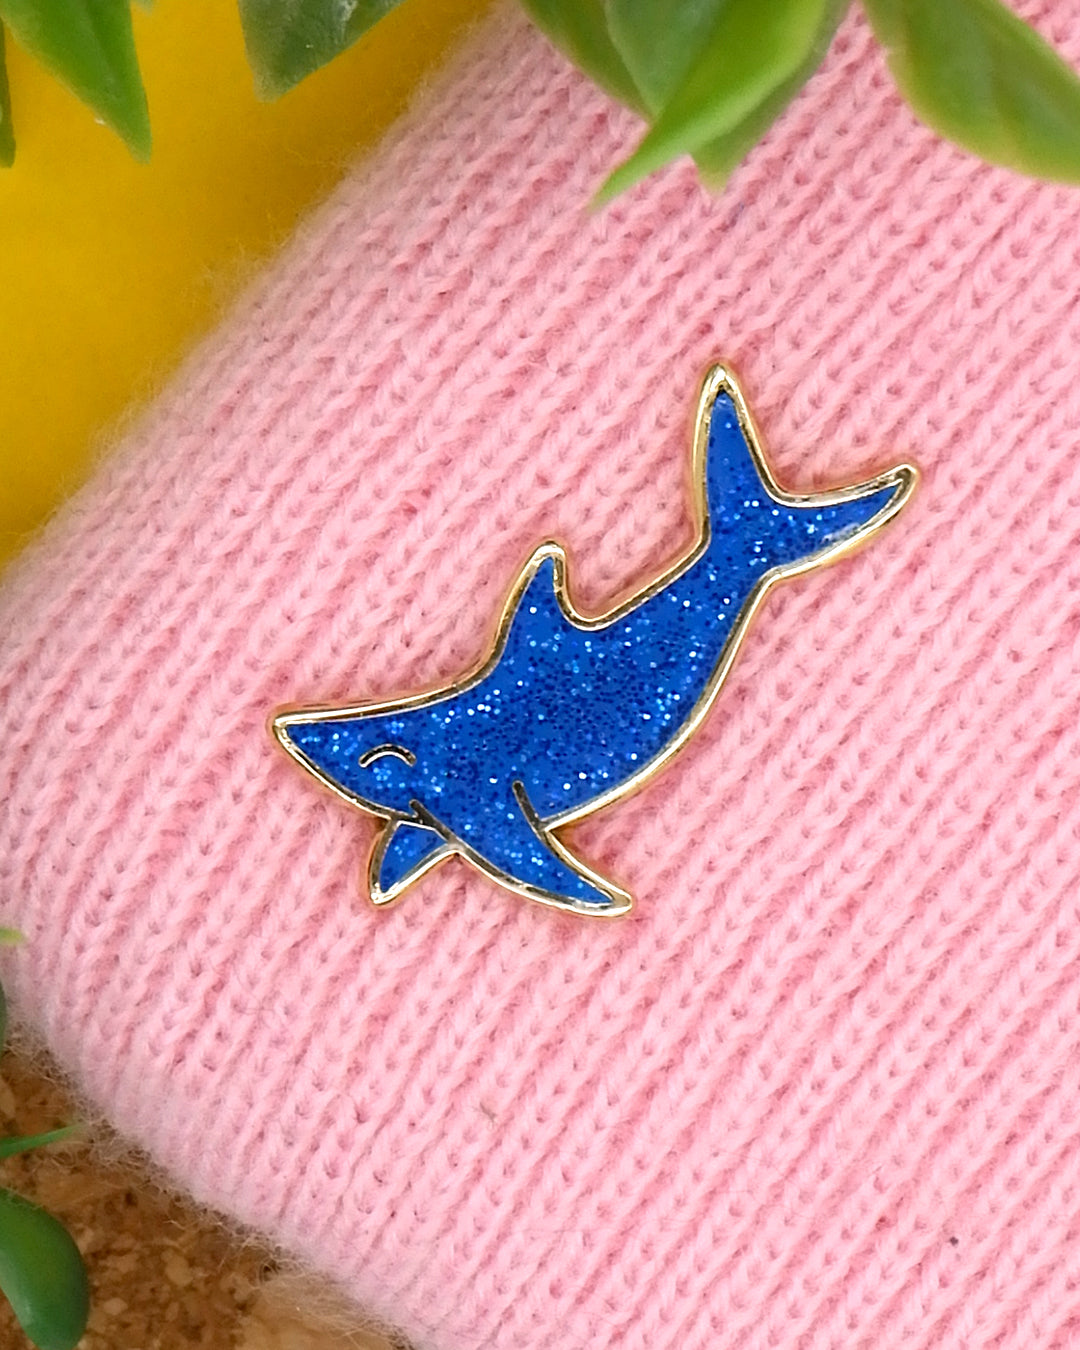 Ocean animals glitter mini pins - set of 4